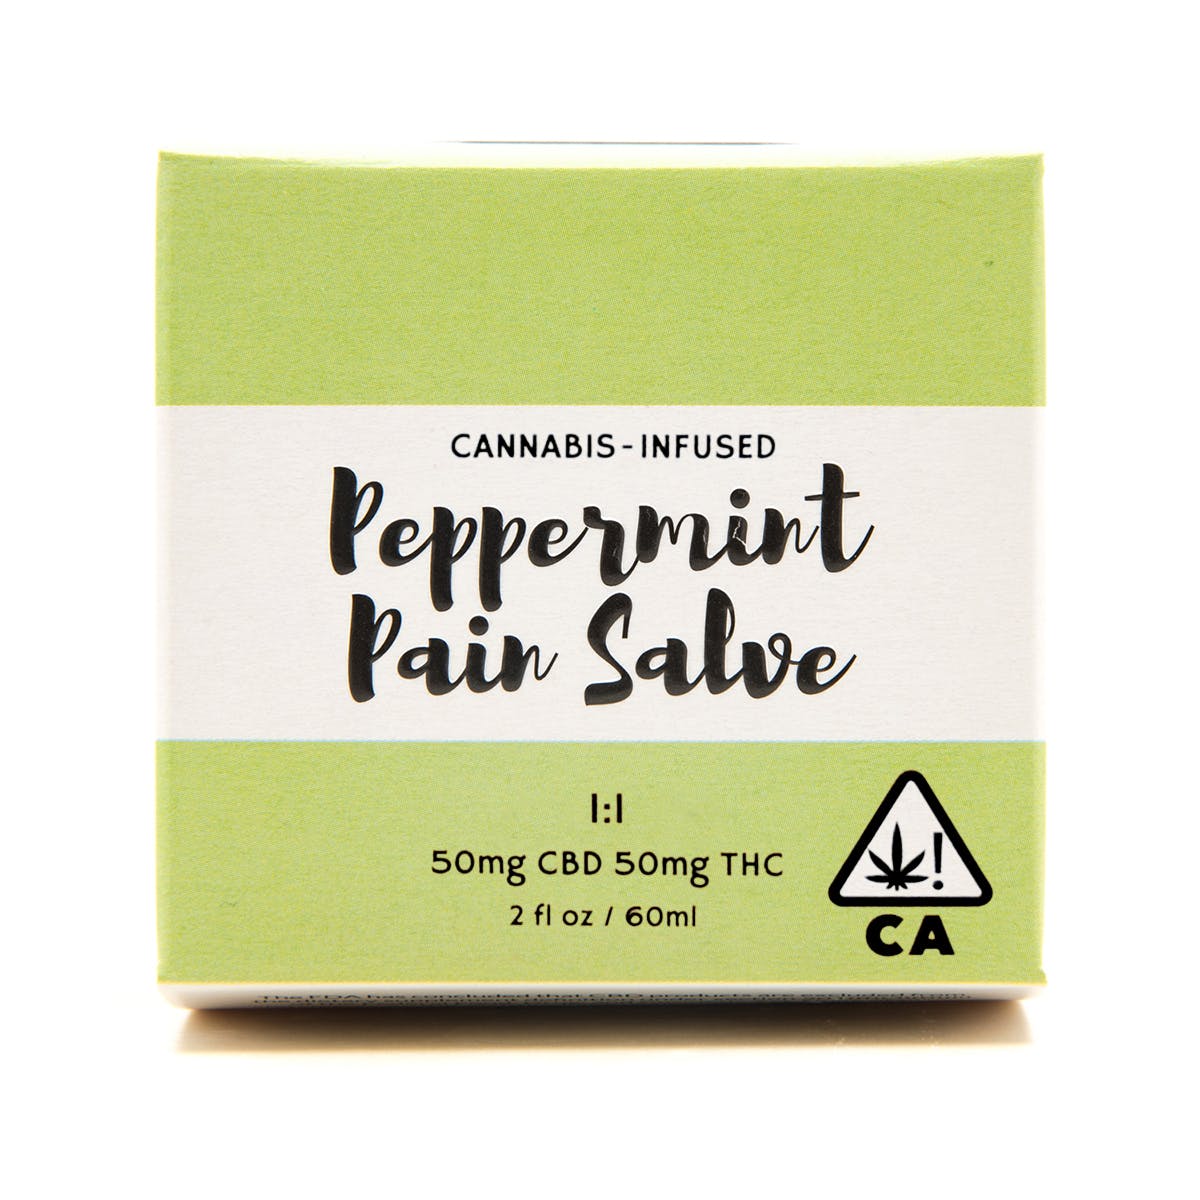 marijuana-dispensaries-libra-in-palm-desert-cannabis-infused-peppermint-pain-salve-11